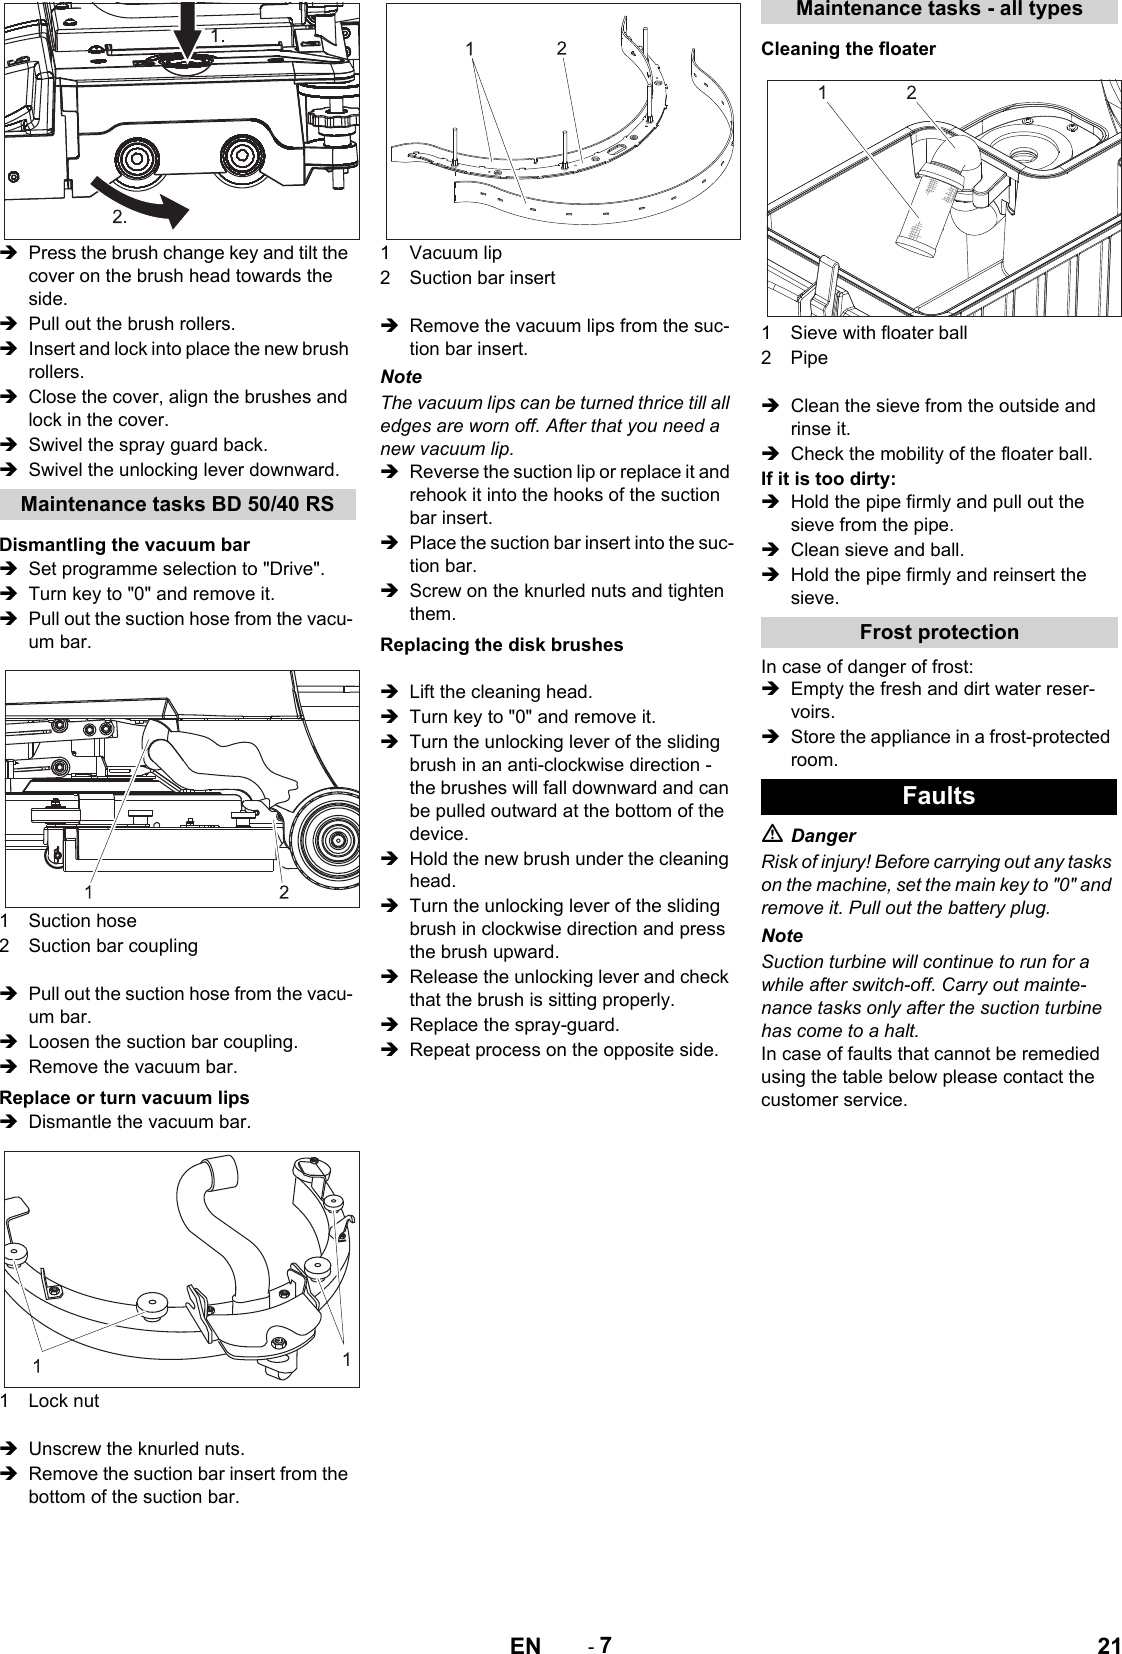 Karcher40RsBpBc OwnerSManual User Guide Page 21